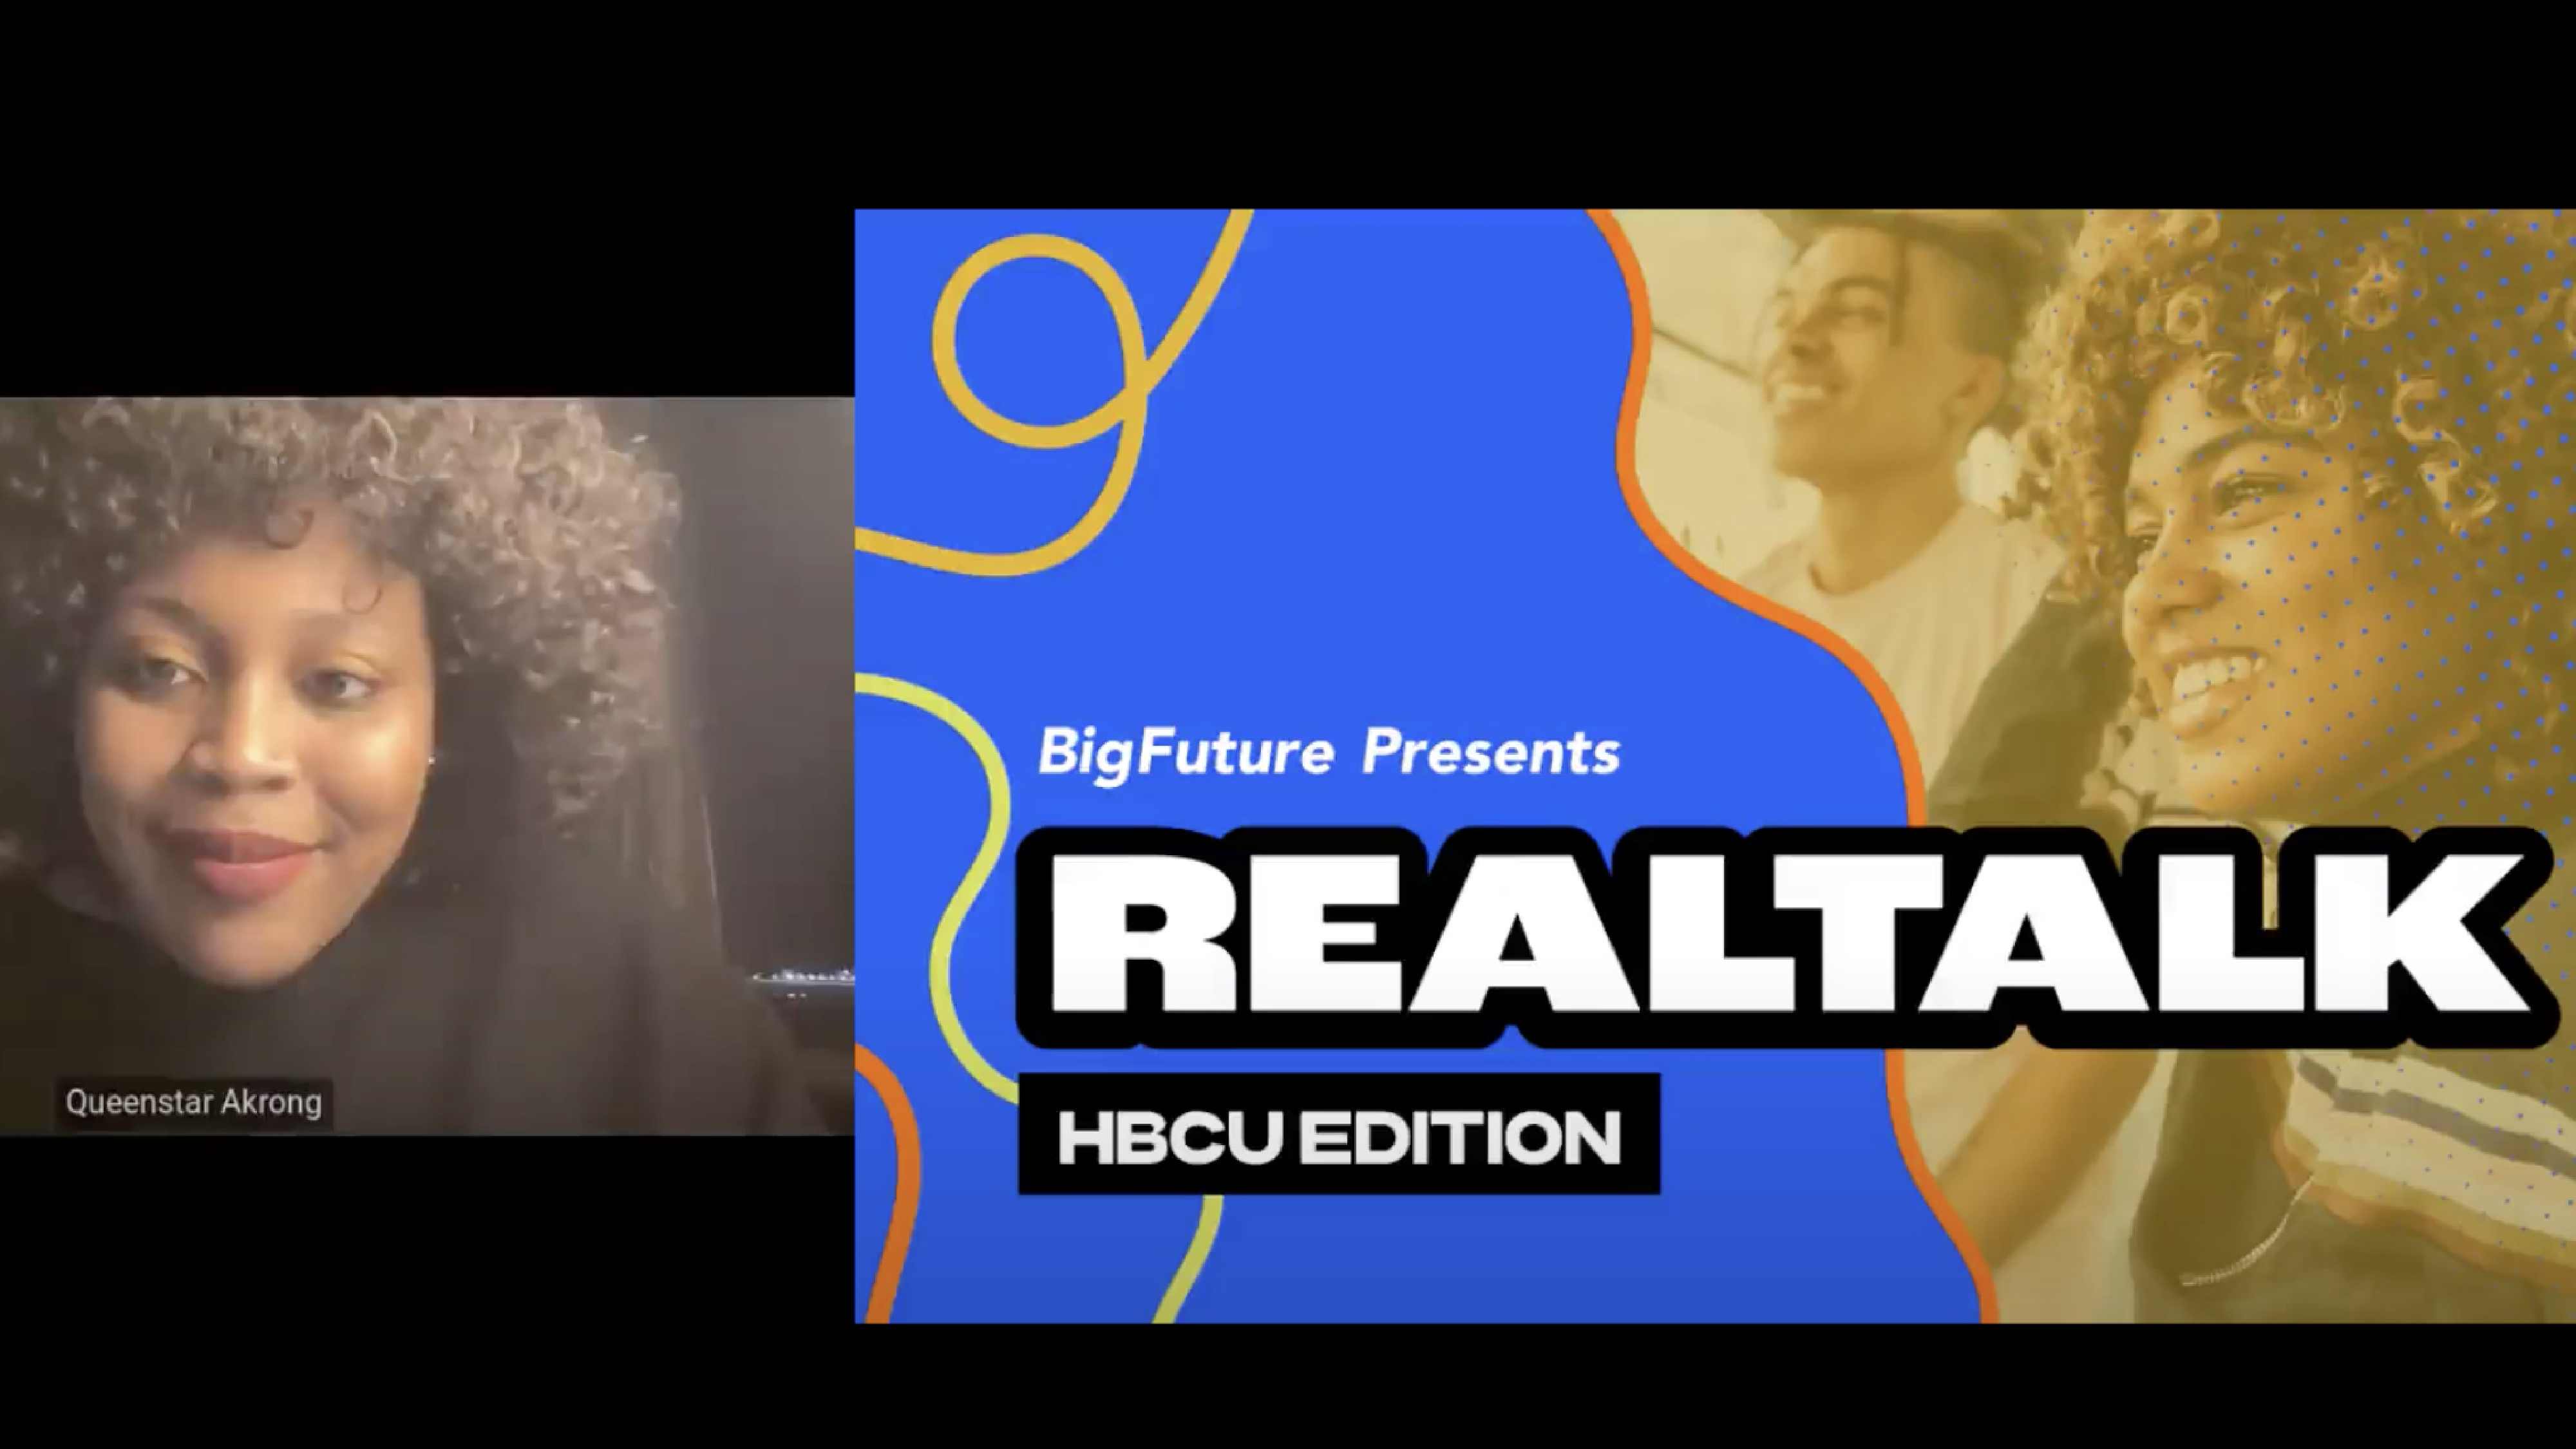 BigFuture presents Real Talk HBCU edition